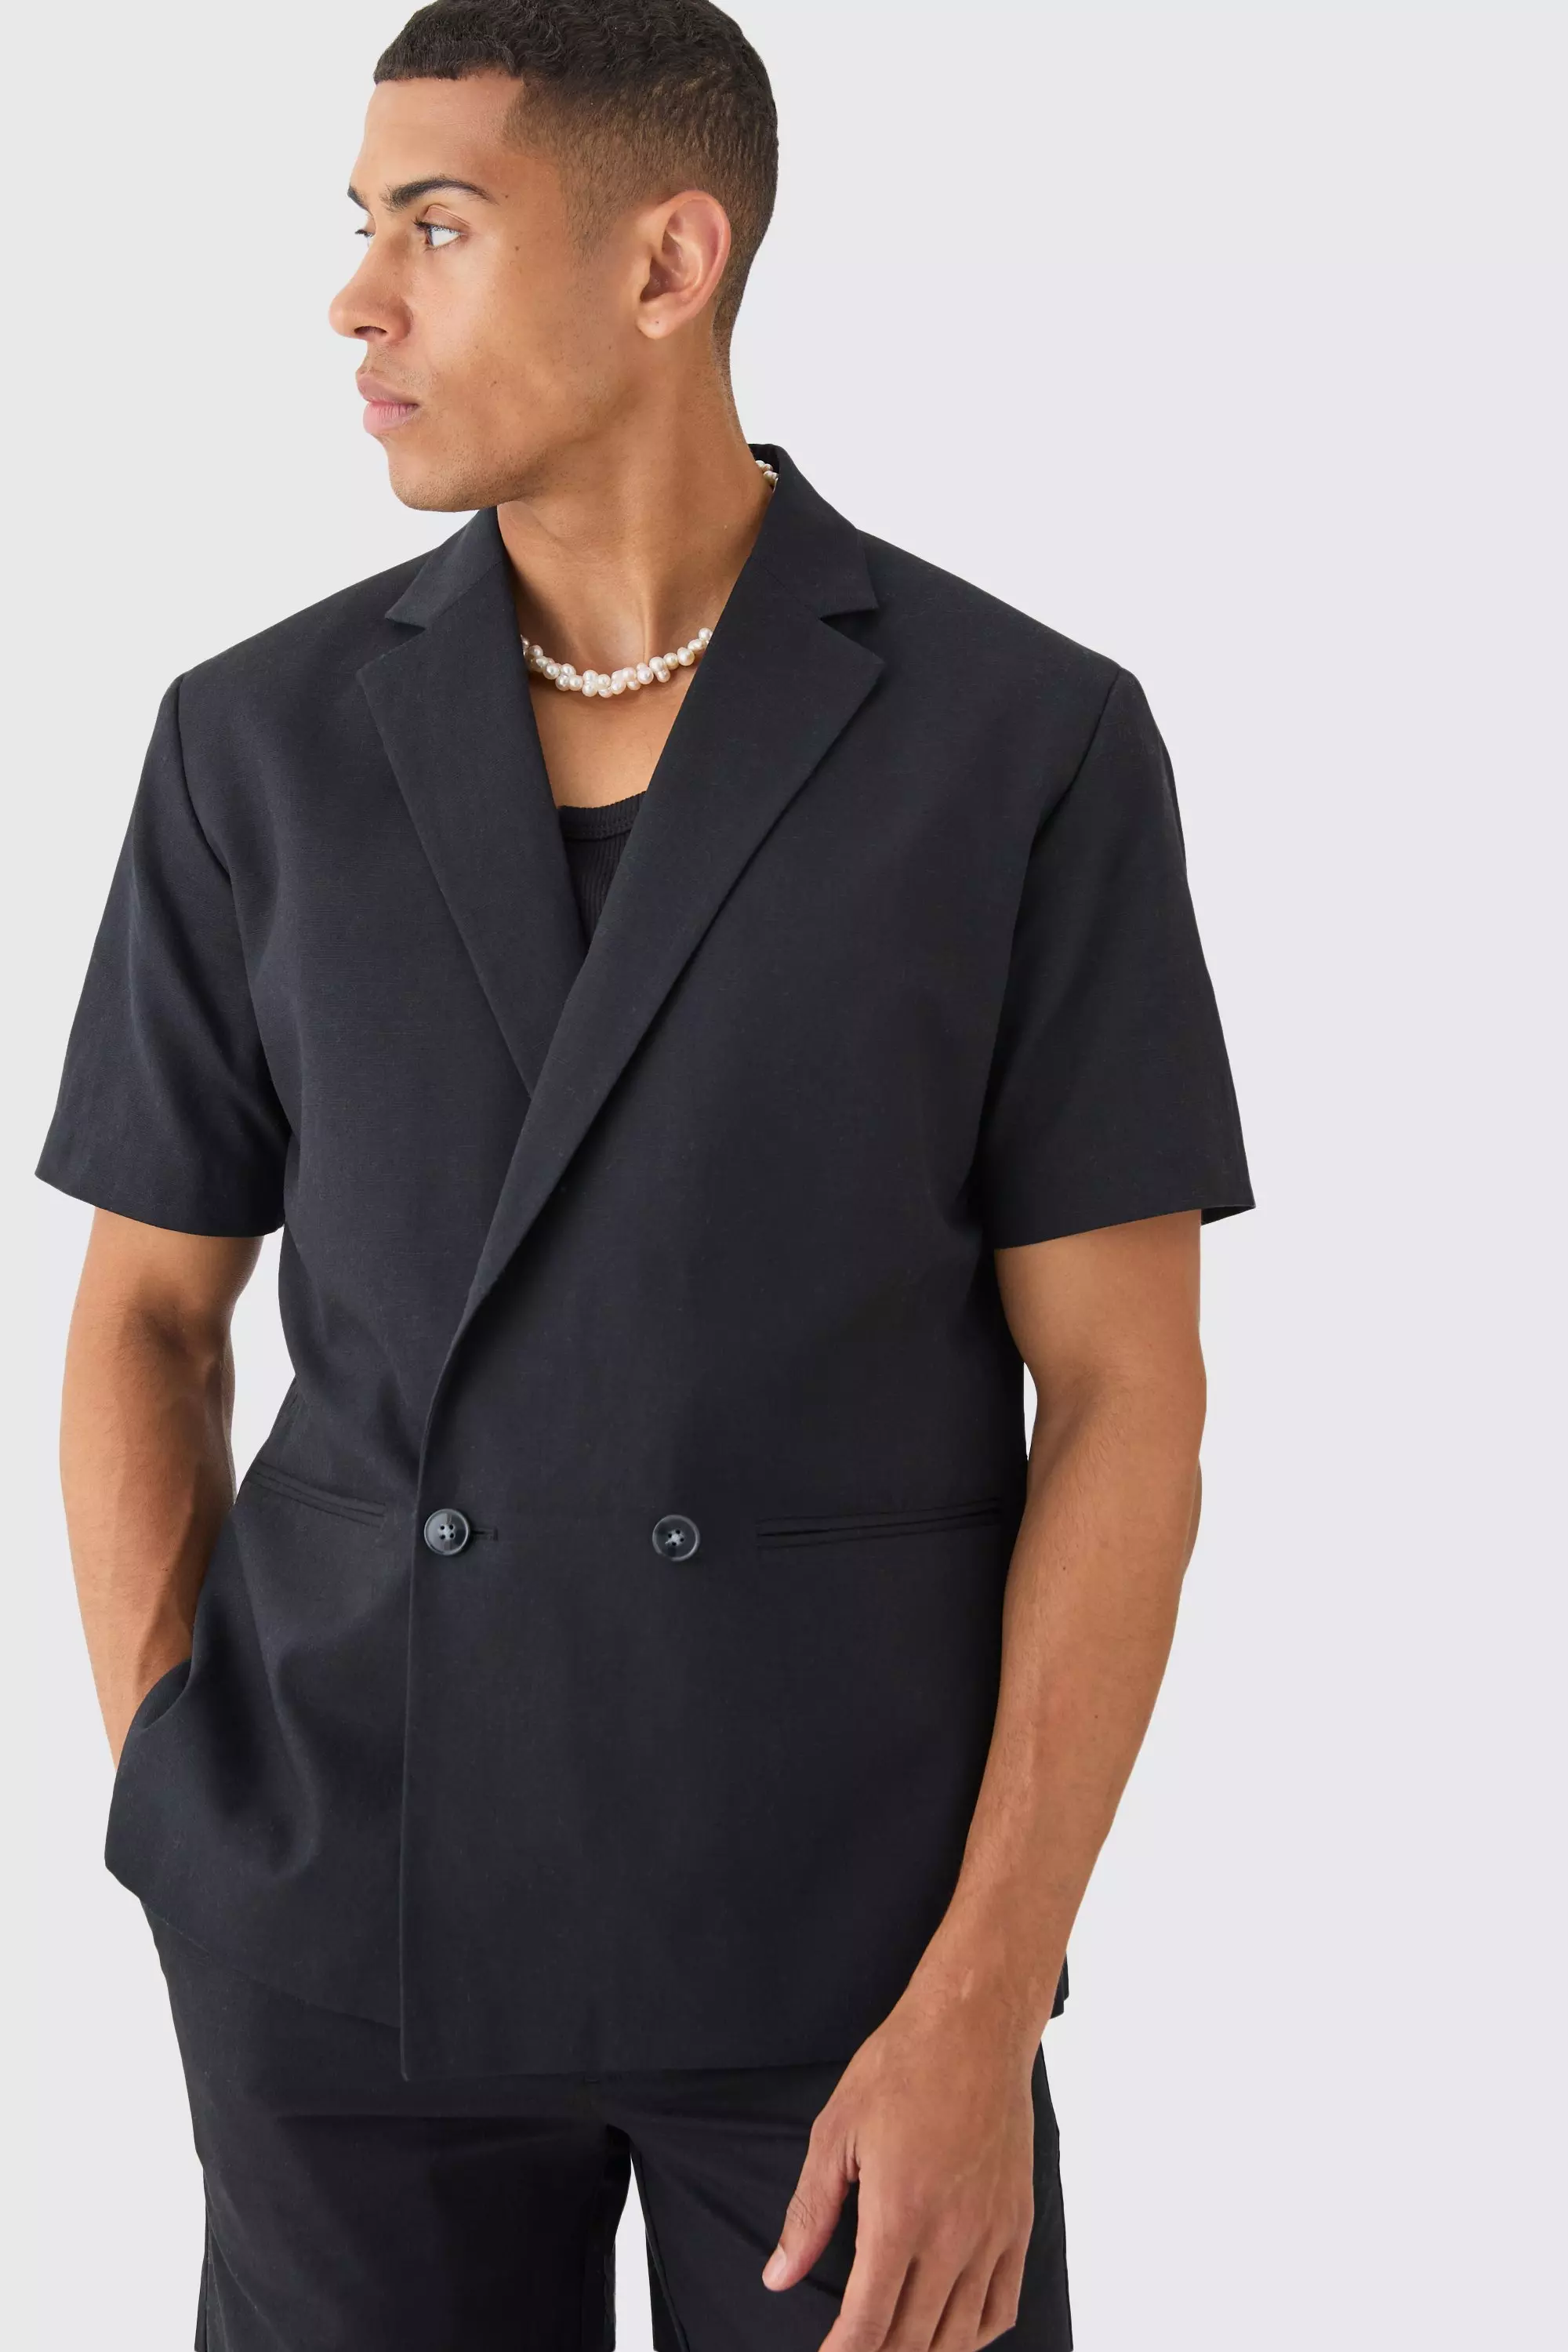 Mix & Match Linen Blend Short Sleeve Double Breasted Blazer Black